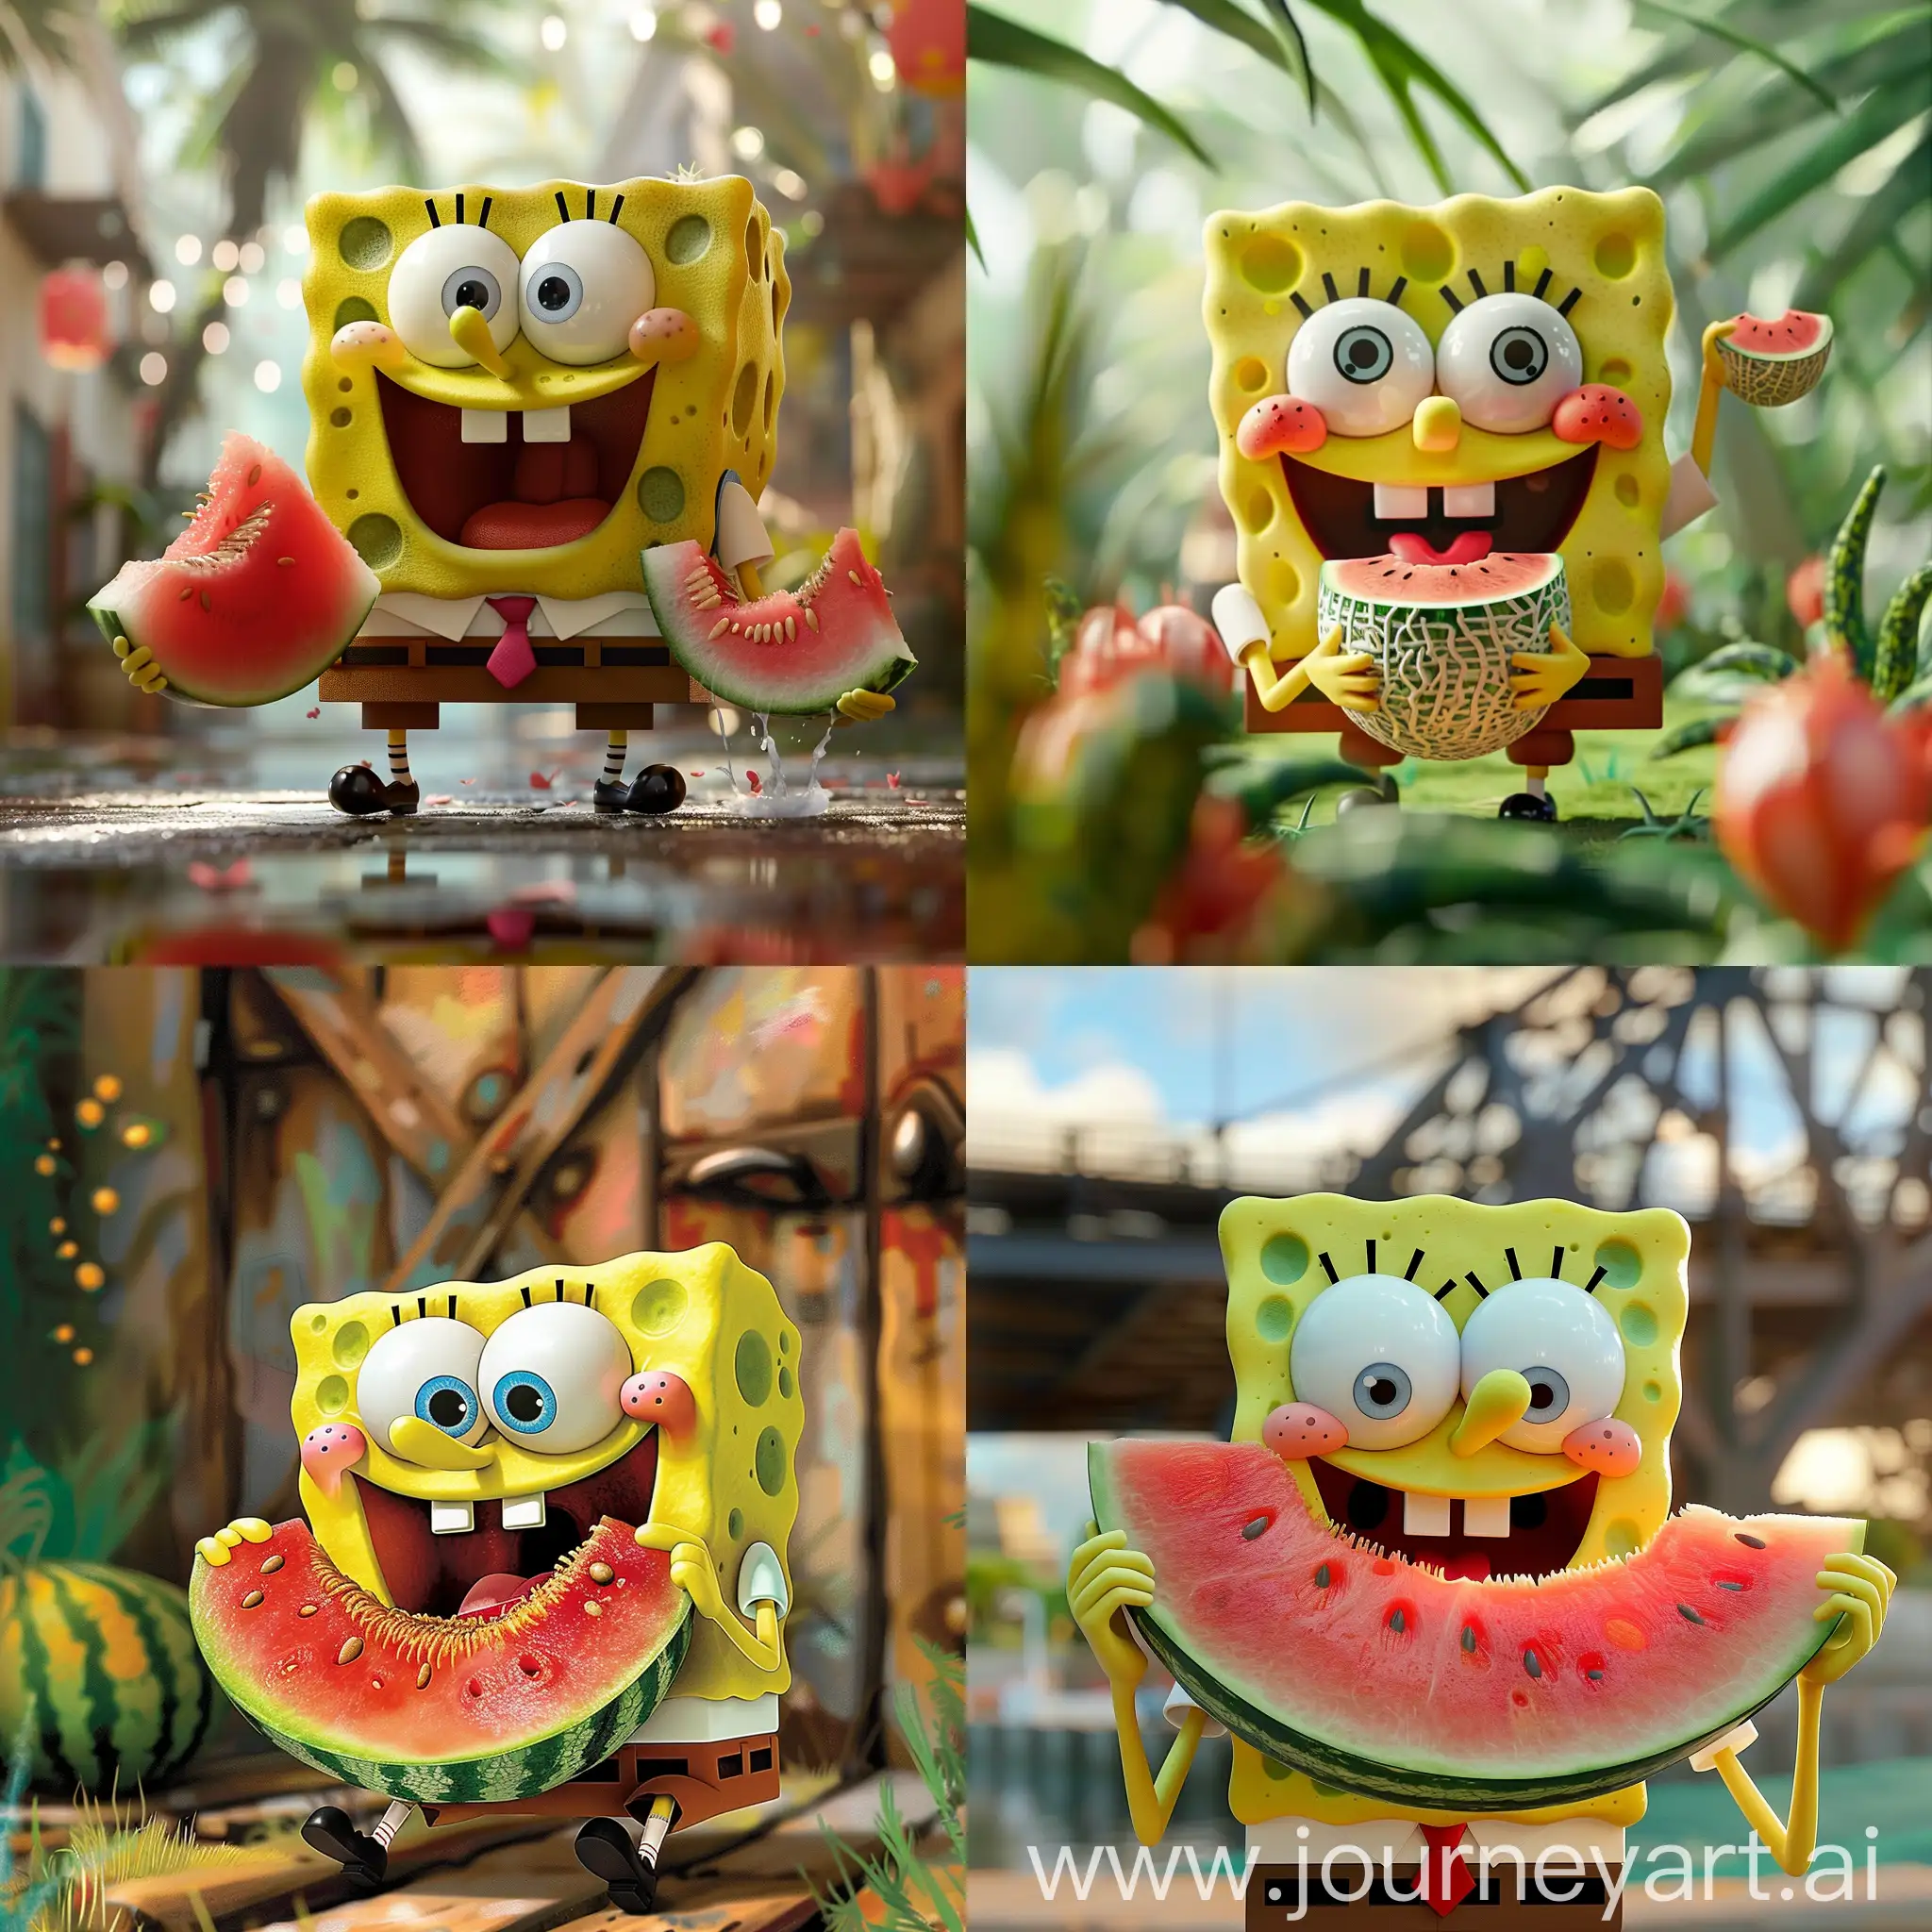 Spongebob-SquarePants-Enjoying-Fresh-Melon